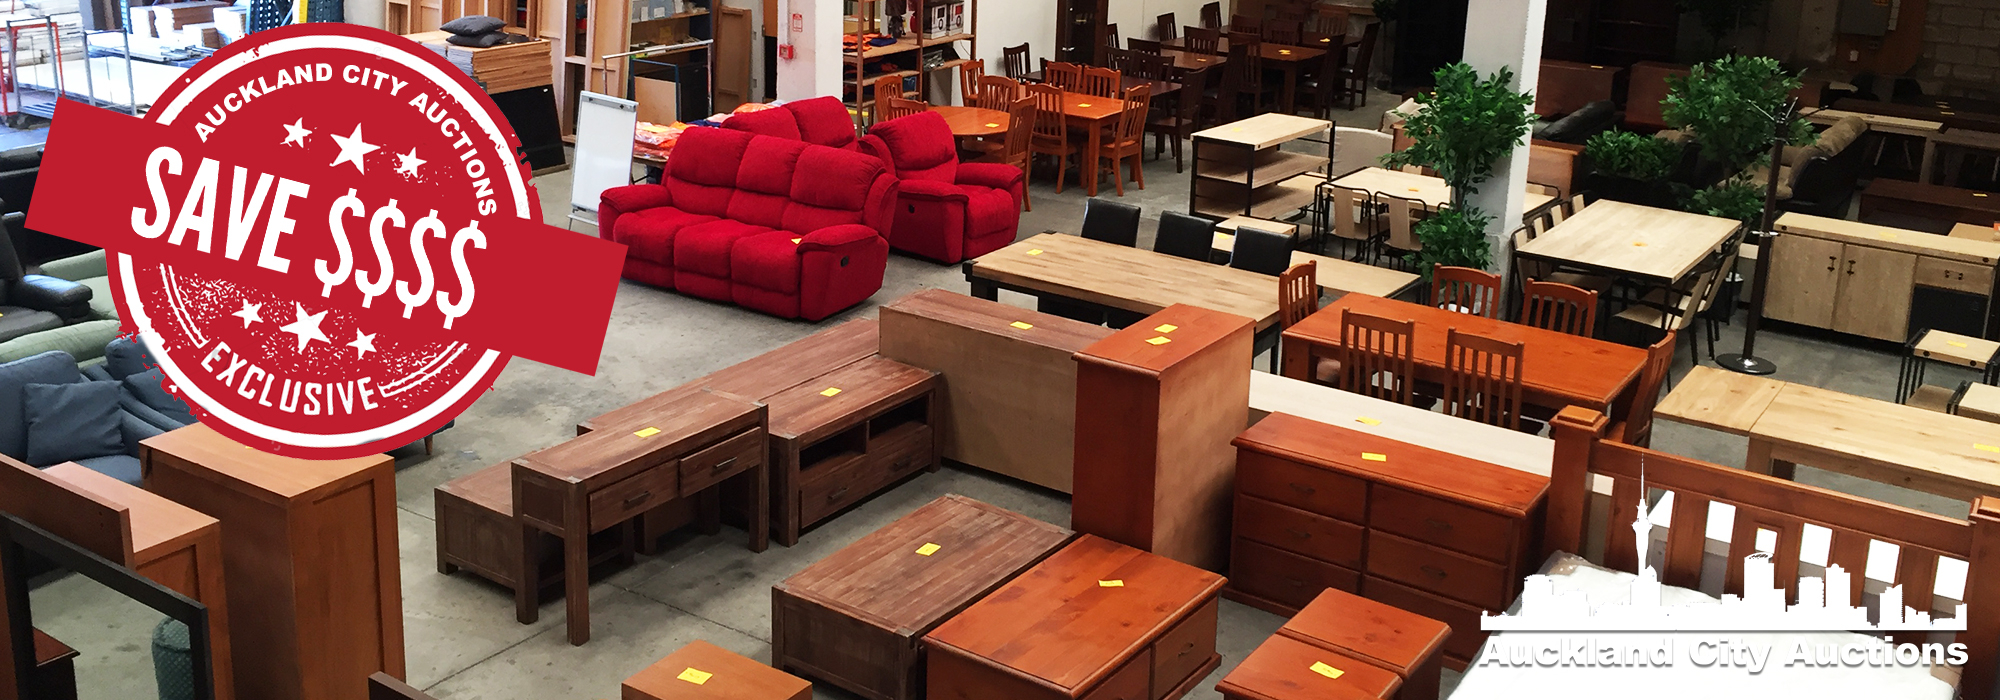 AucklandCityAuctions-furniture